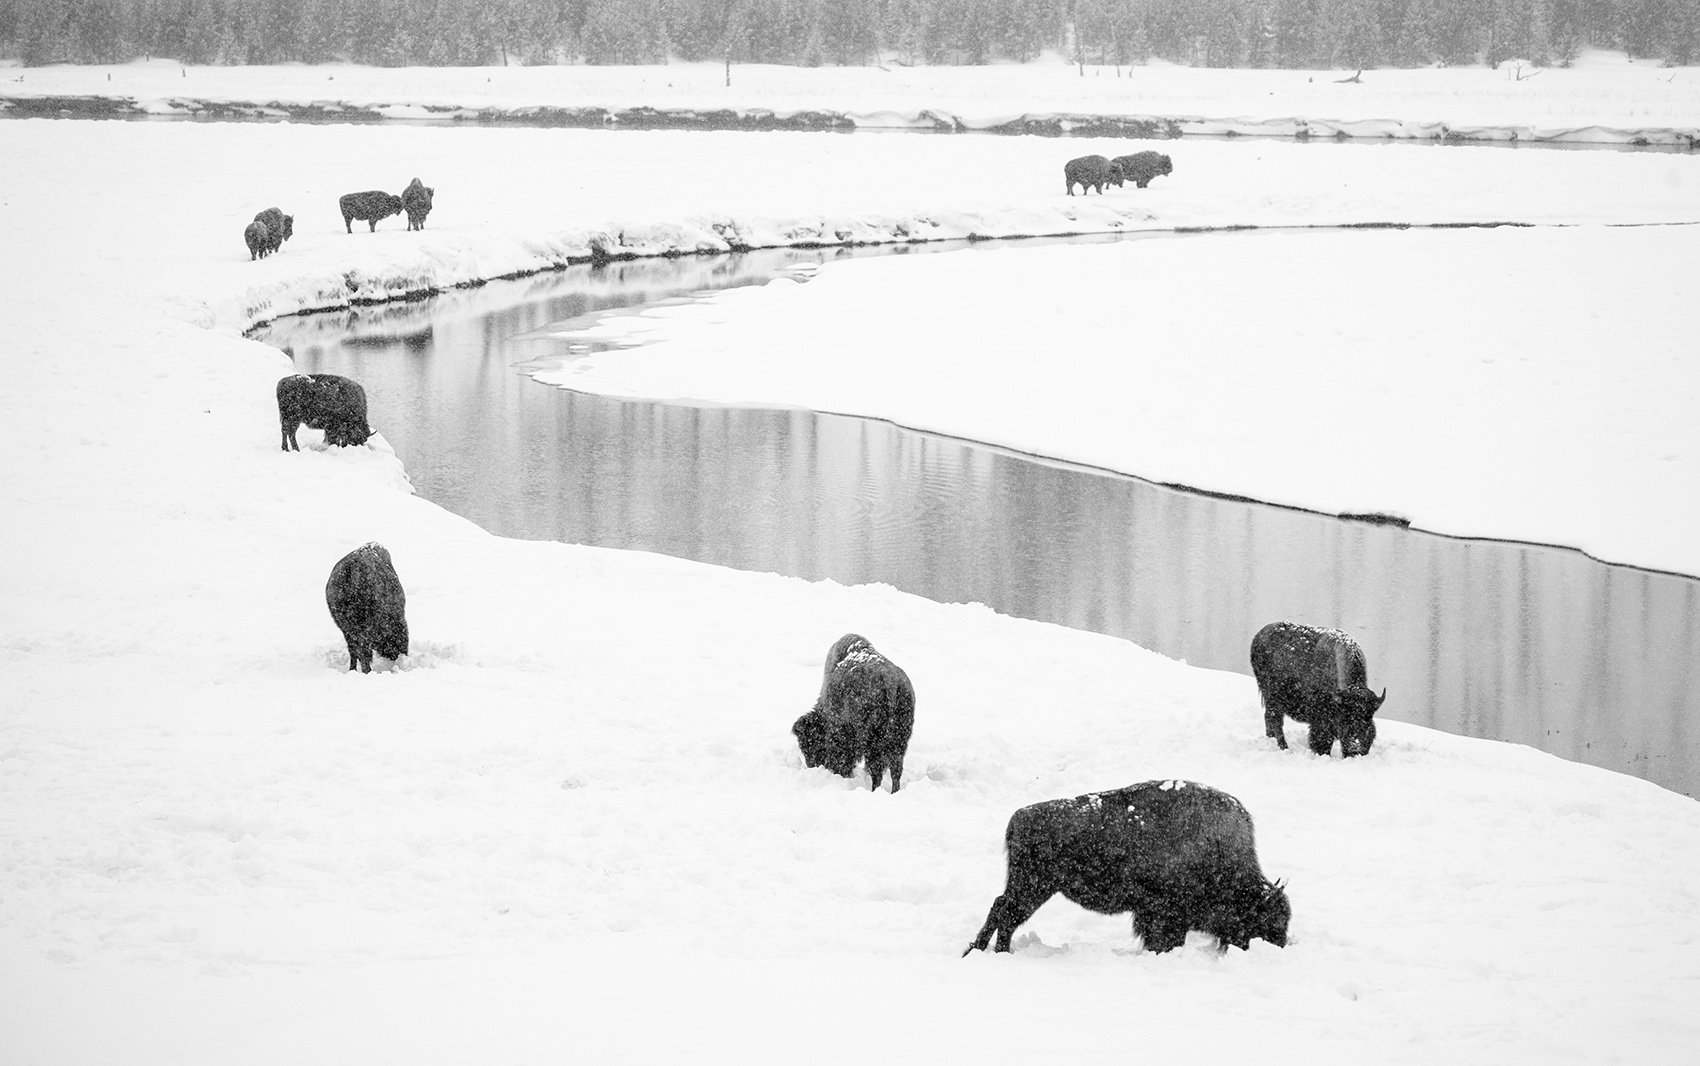 Snowing on bison